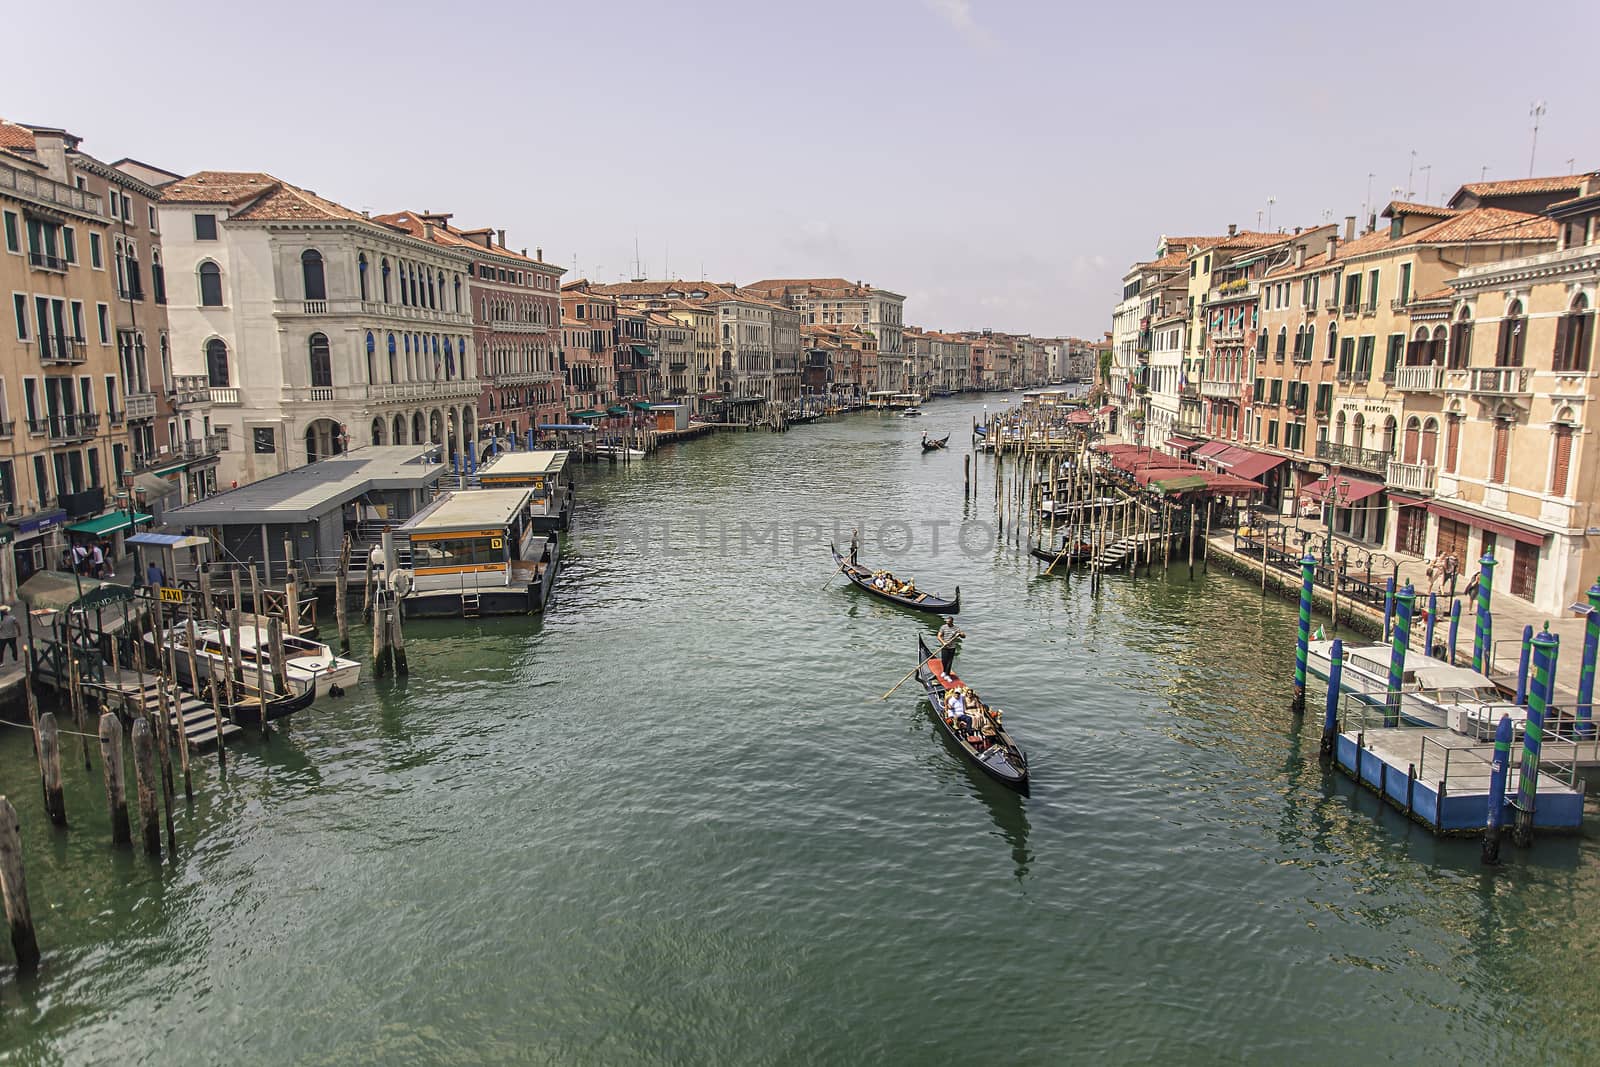 Canal Grande Landscape in Venice 5 by pippocarlot